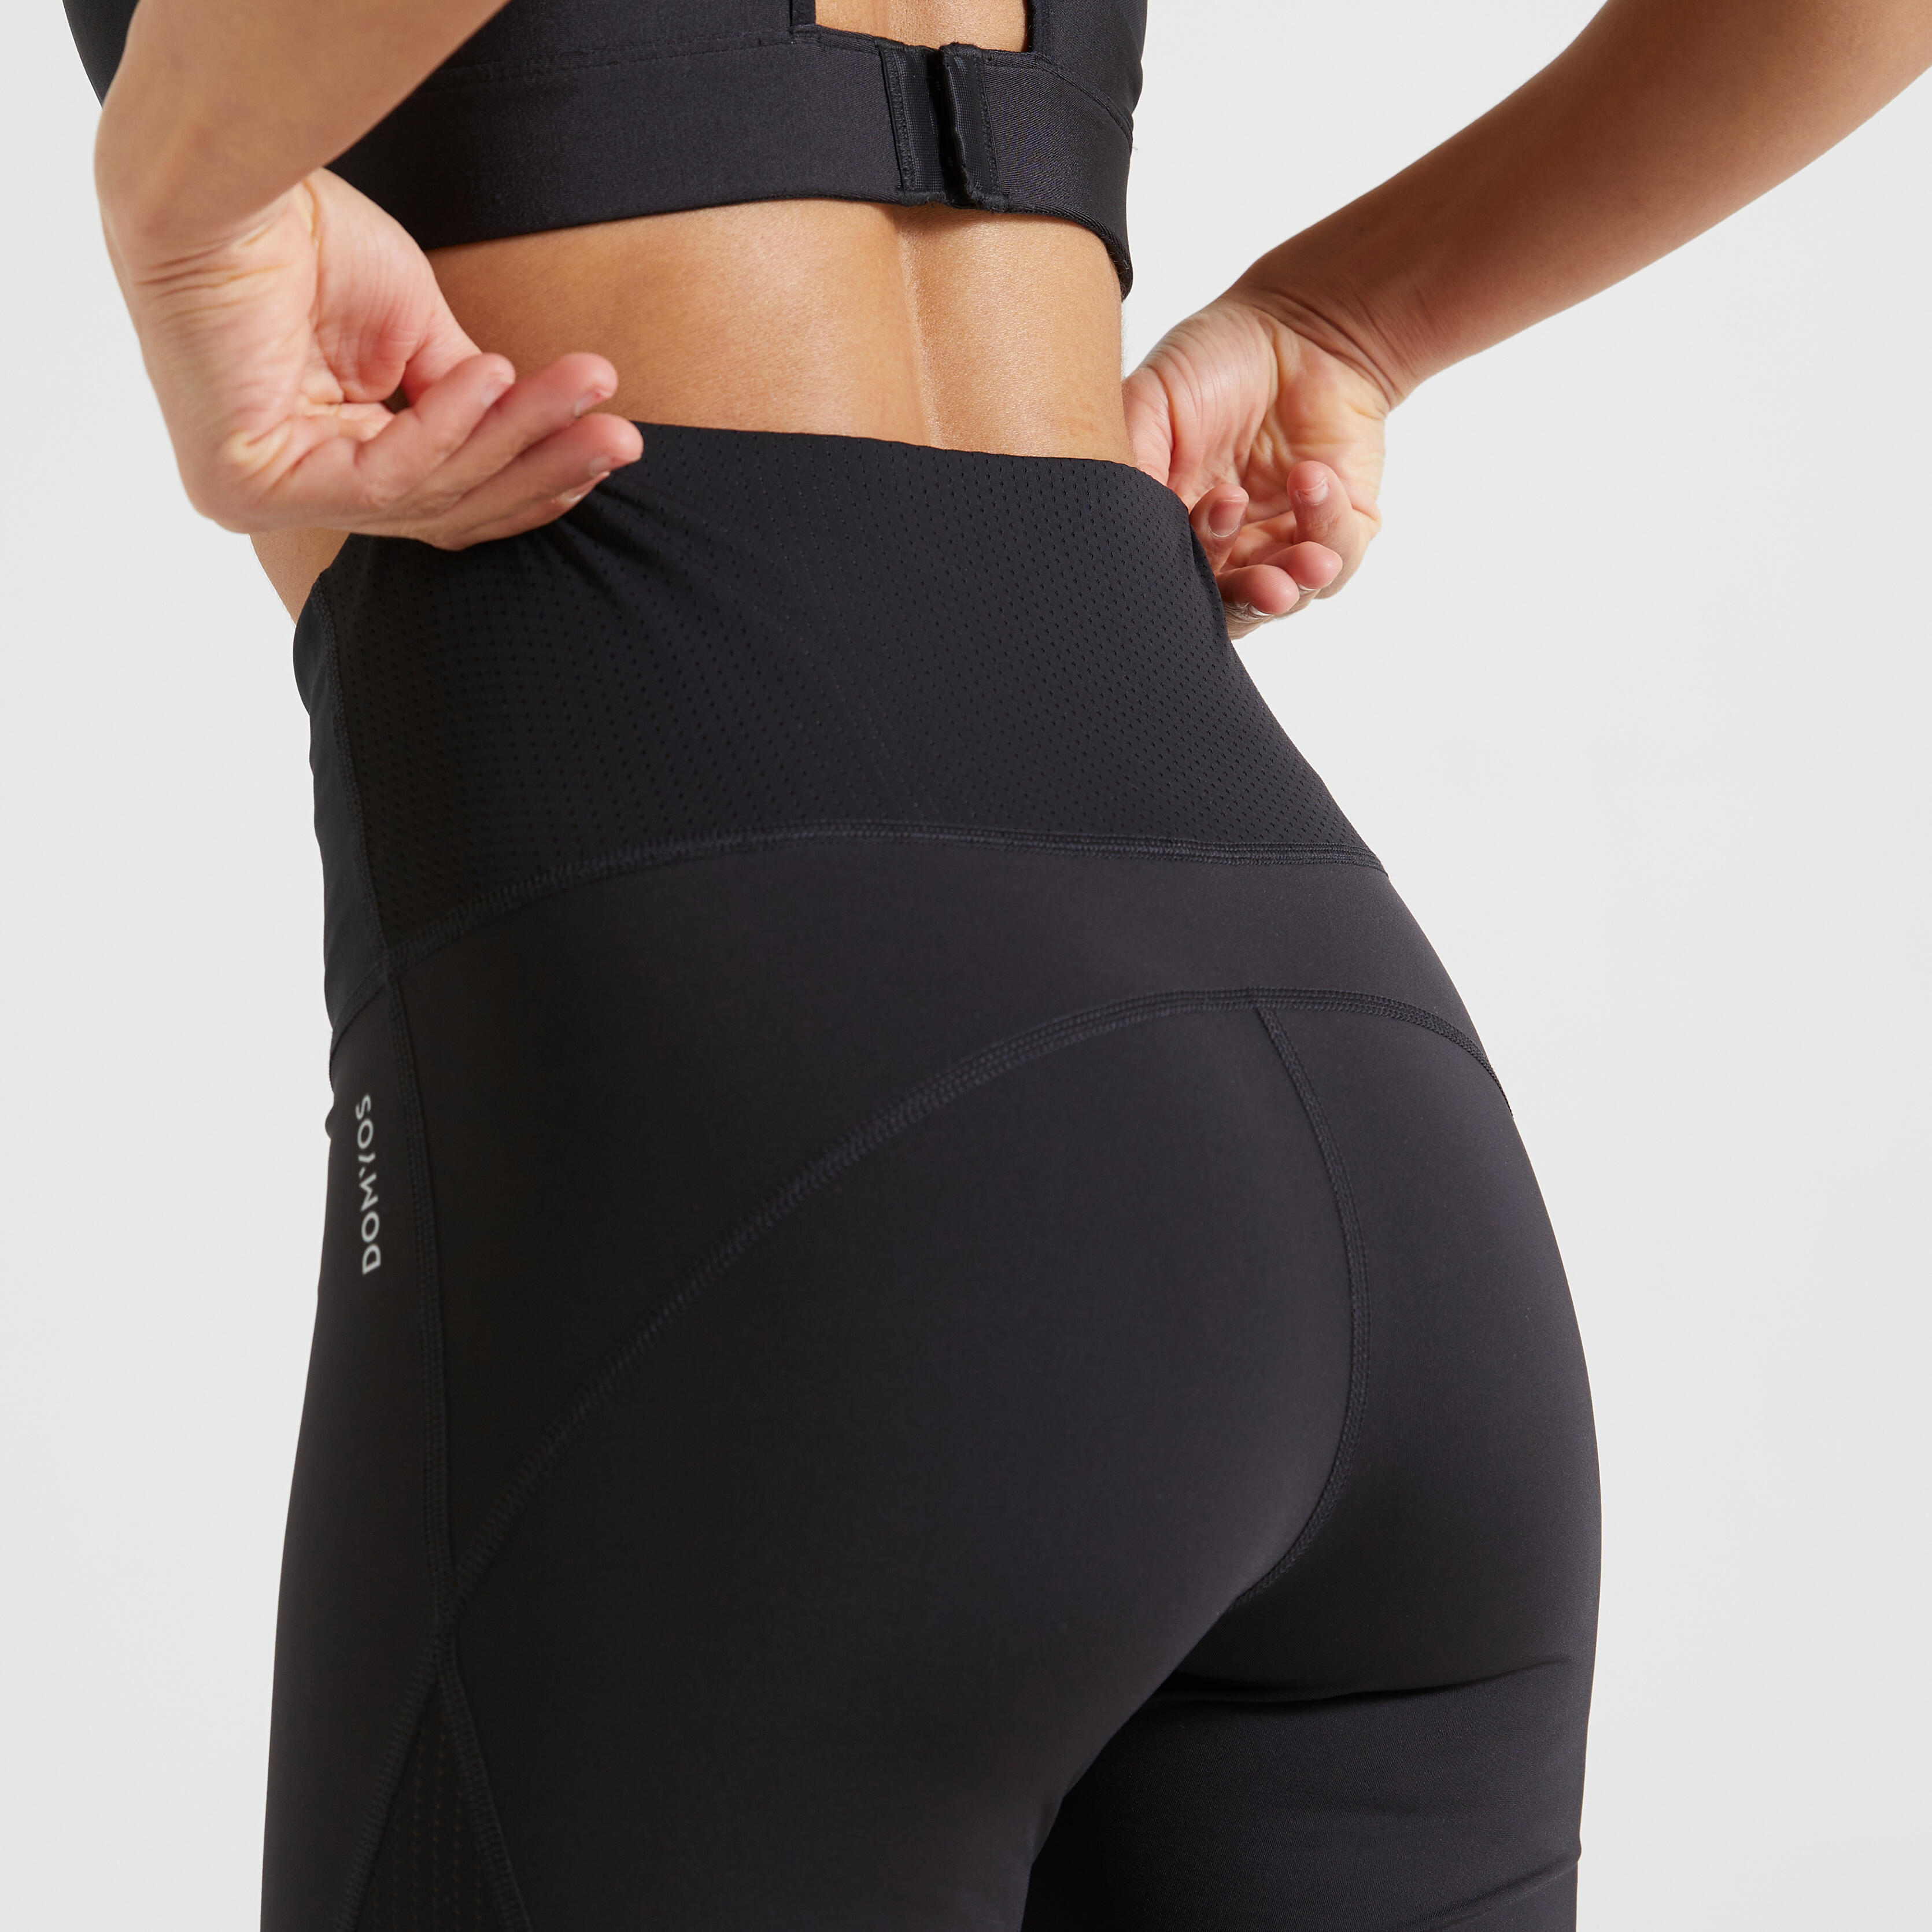 Buy Domyos by Decathlon Women Black Training or Gym Hot Pants Shorts at